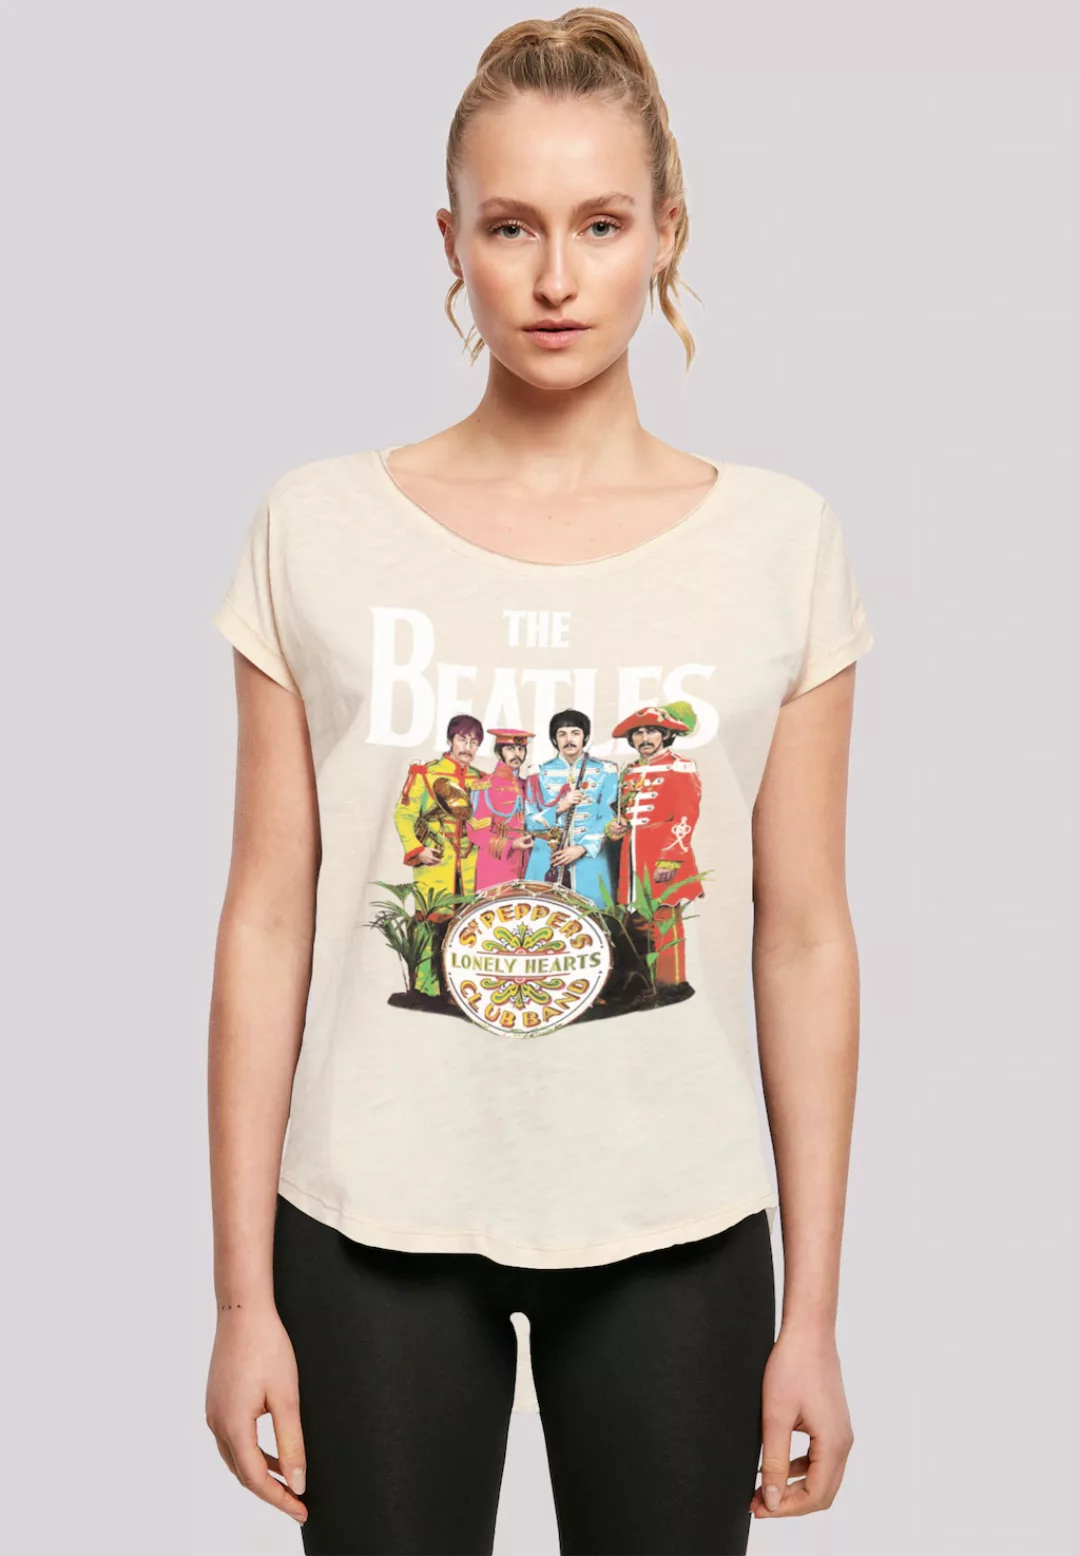 F4NT4STIC T-Shirt "The Beatles Band Sgt Pepper Black", Print günstig online kaufen